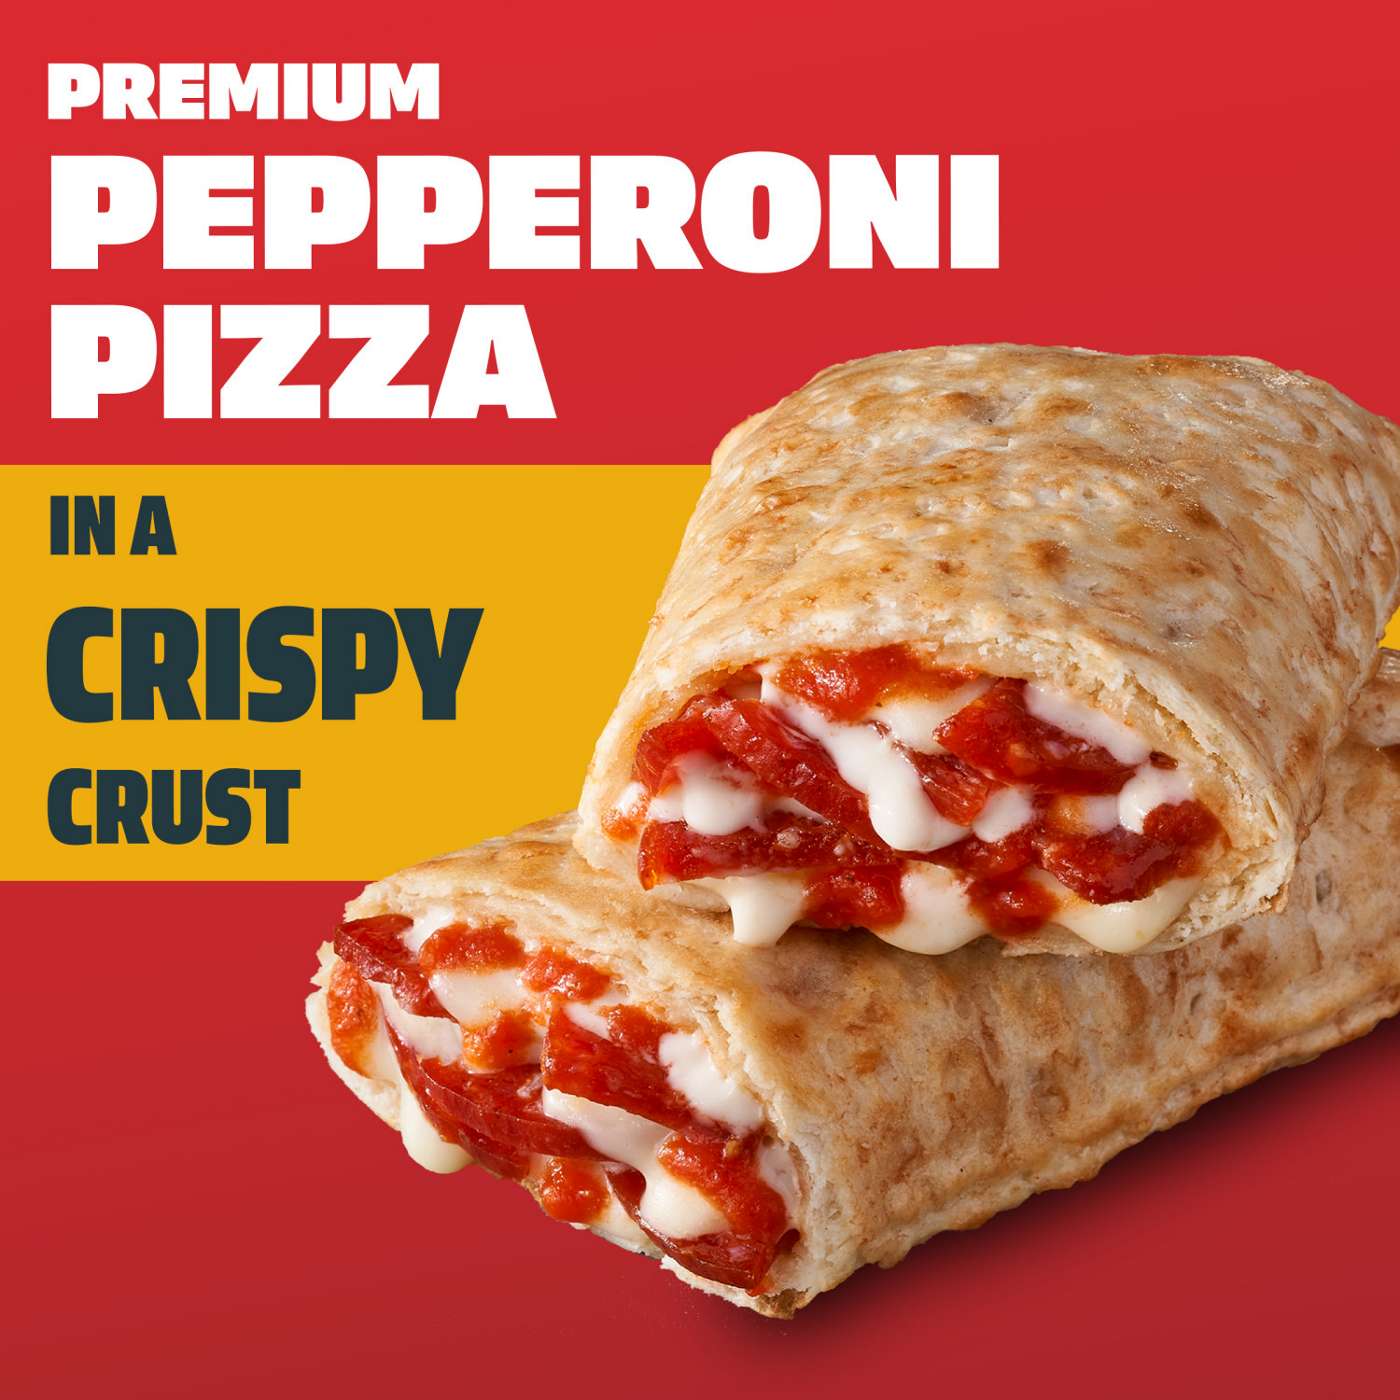 Hot Pockets Pepperoni Pizza Frozen Sandwiches - Crispy Crust; image 6 of 7